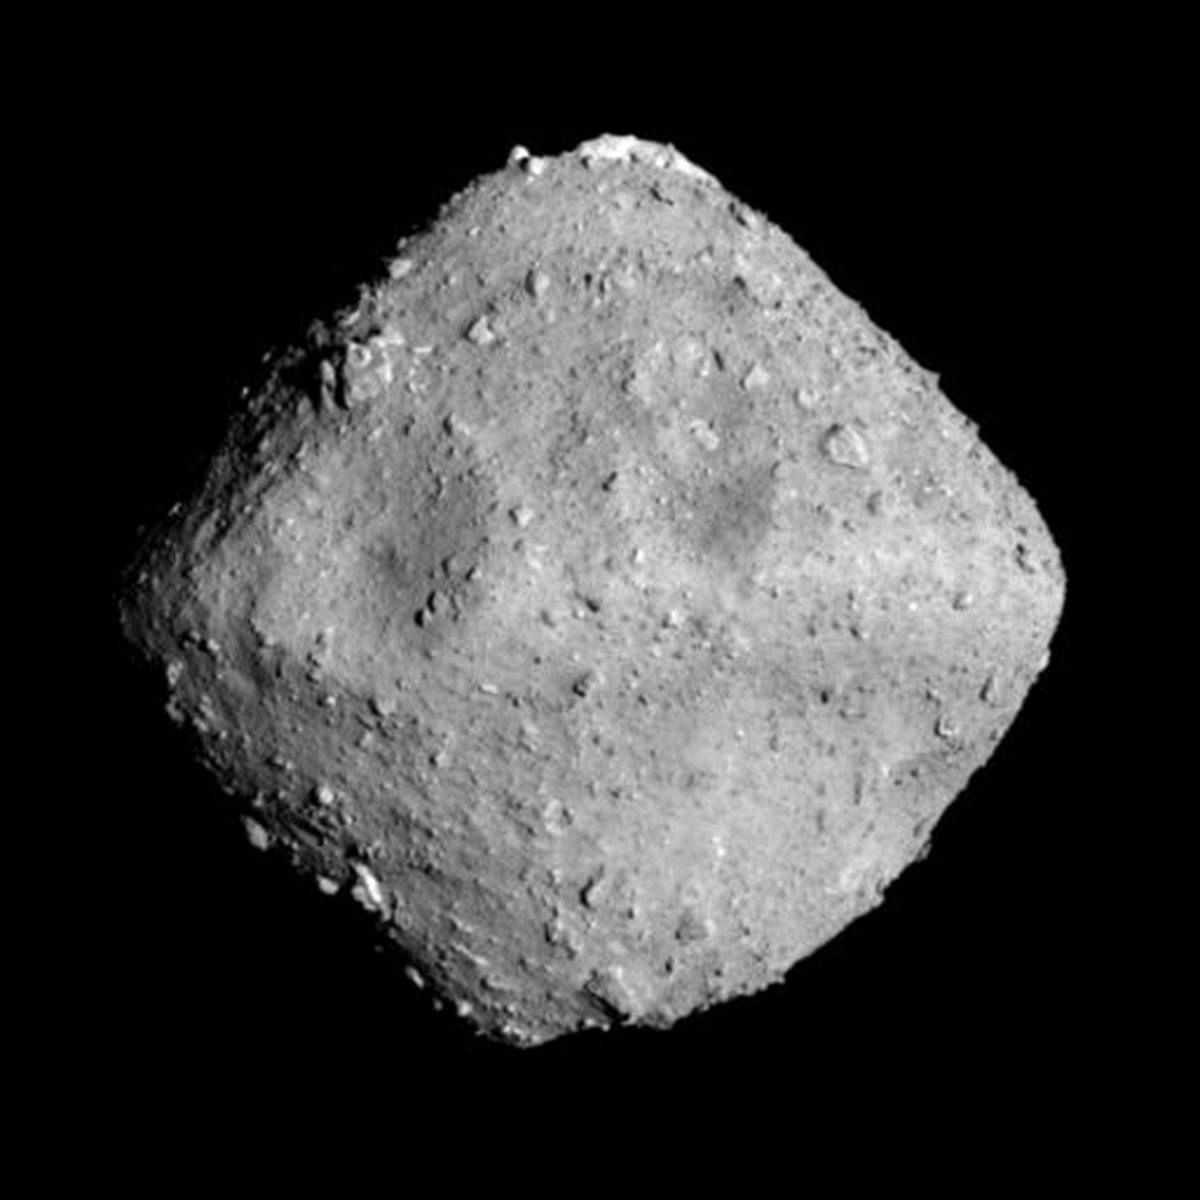 Asteroid probe Hayabusa2 set for final touchdown